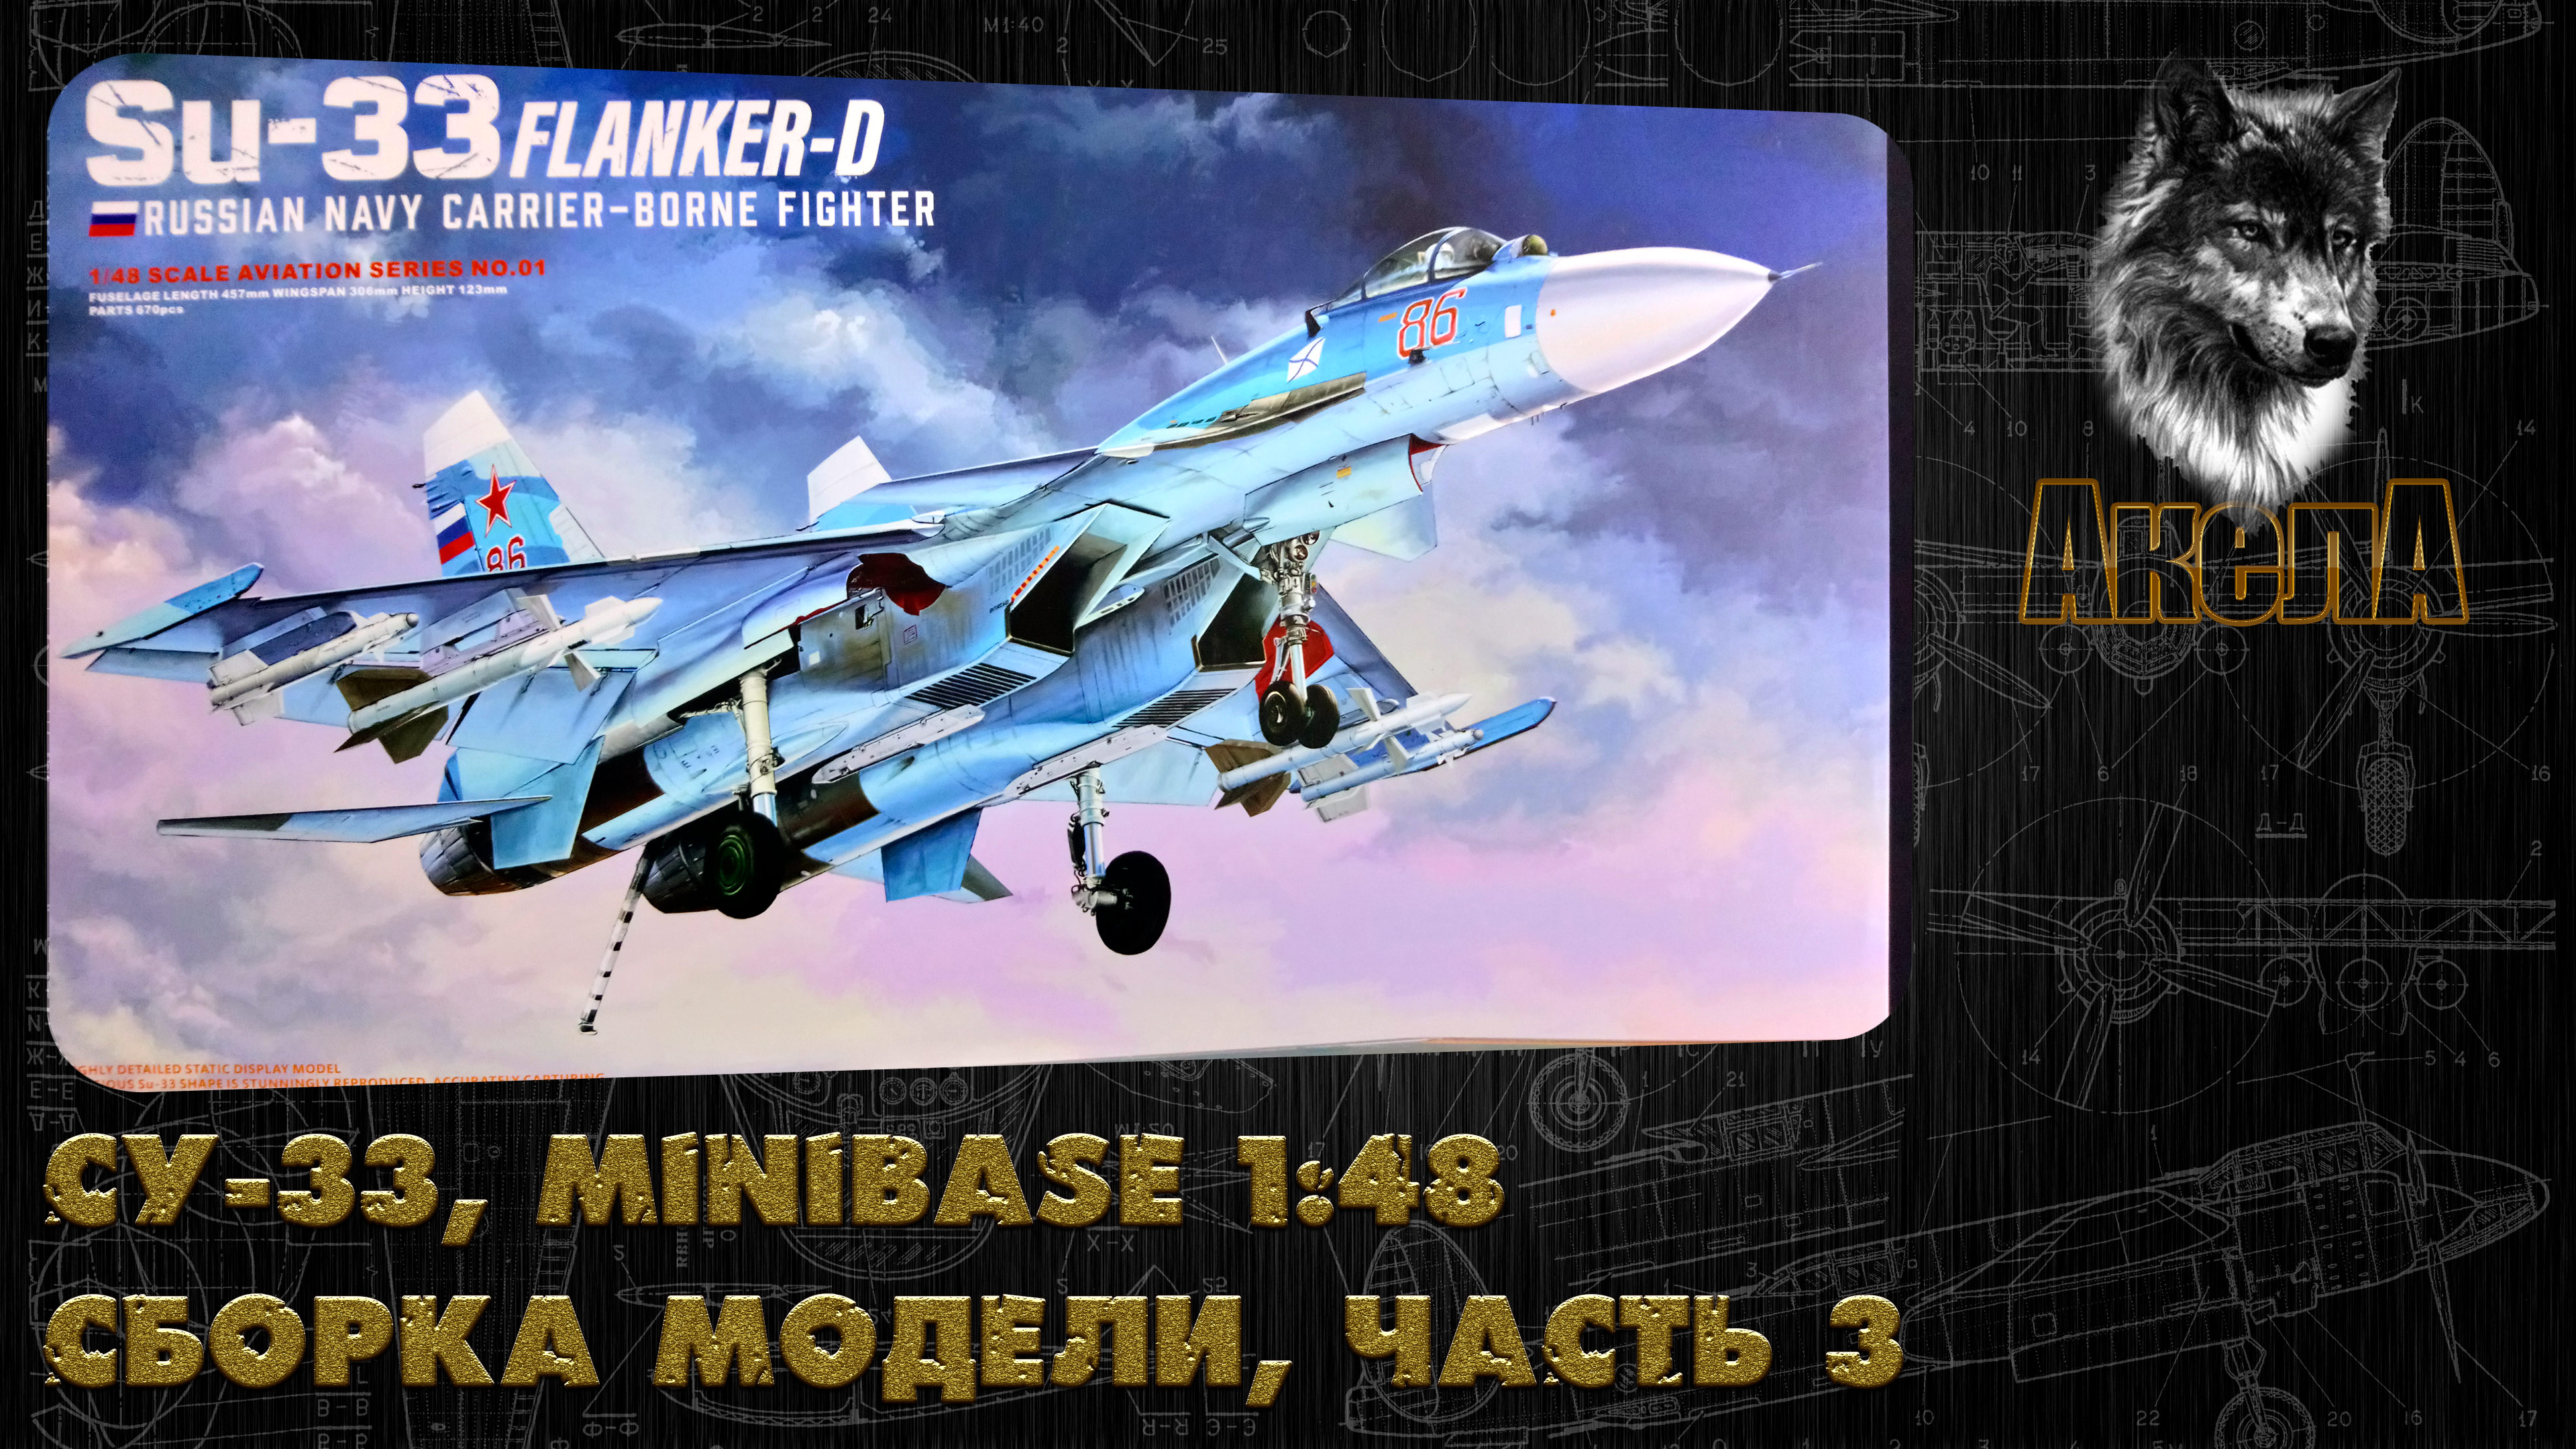 Су-33, Minibase 1/48, сборка модели, часть 3